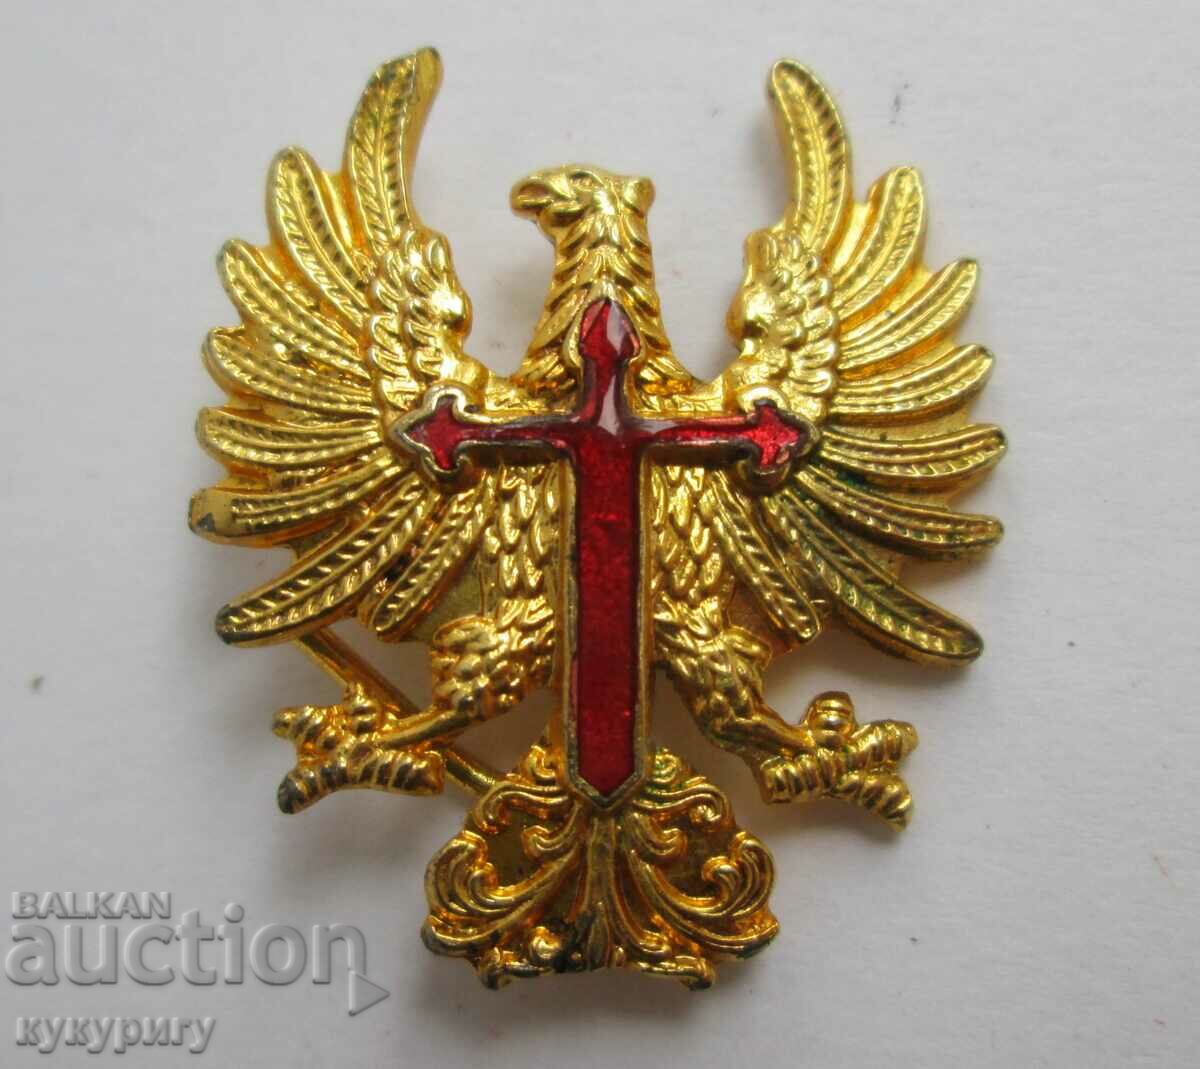 Old ecclesiastical lapel badge gilt eagle cross enamel